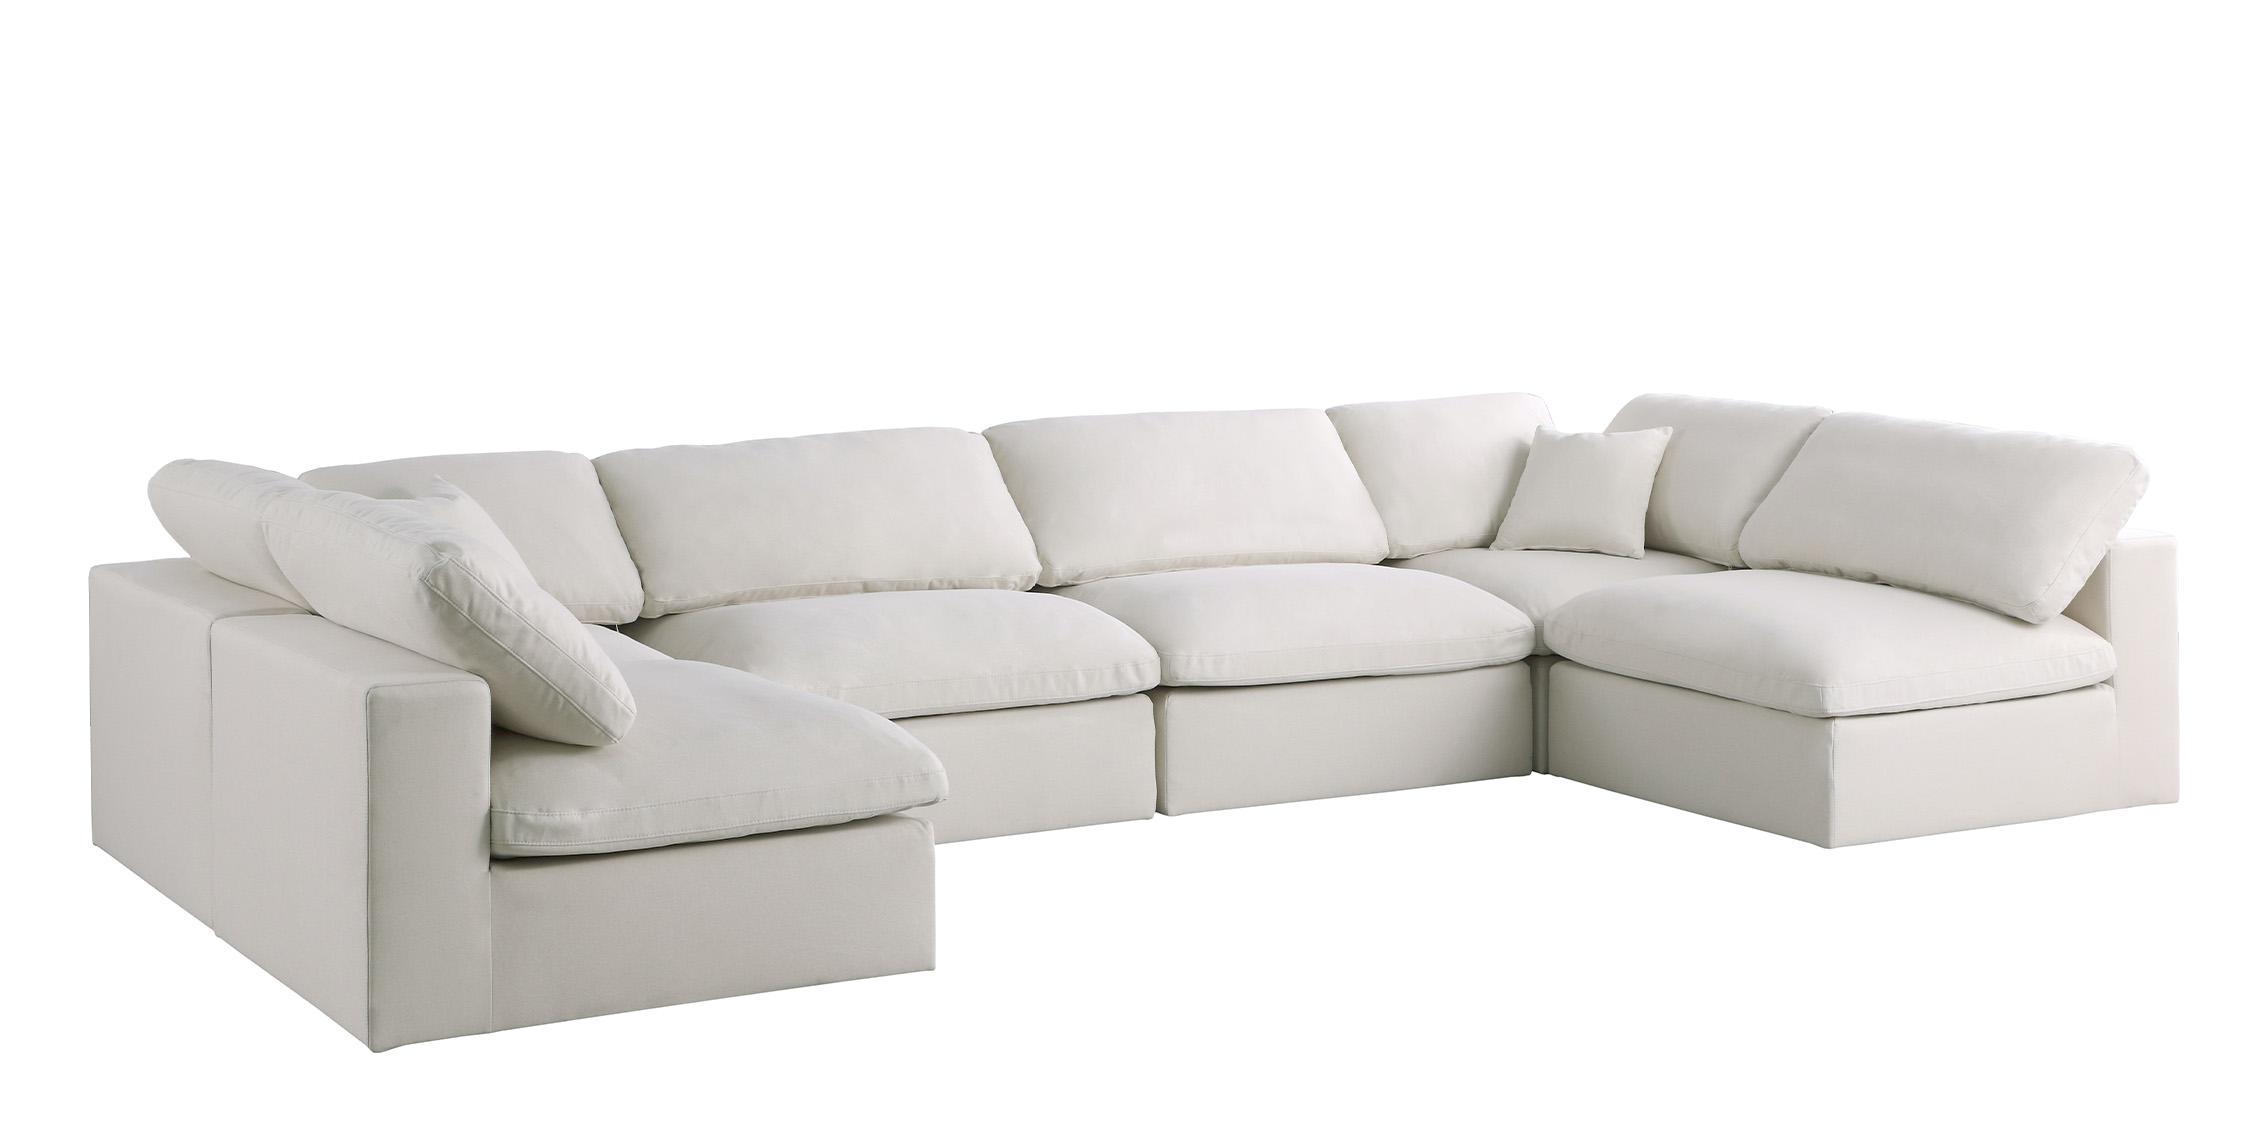 Contemporary, Modern Modular Sectional Sofa 602Cream-Sec6D 602Cream-Sec6D in Cream Fabric